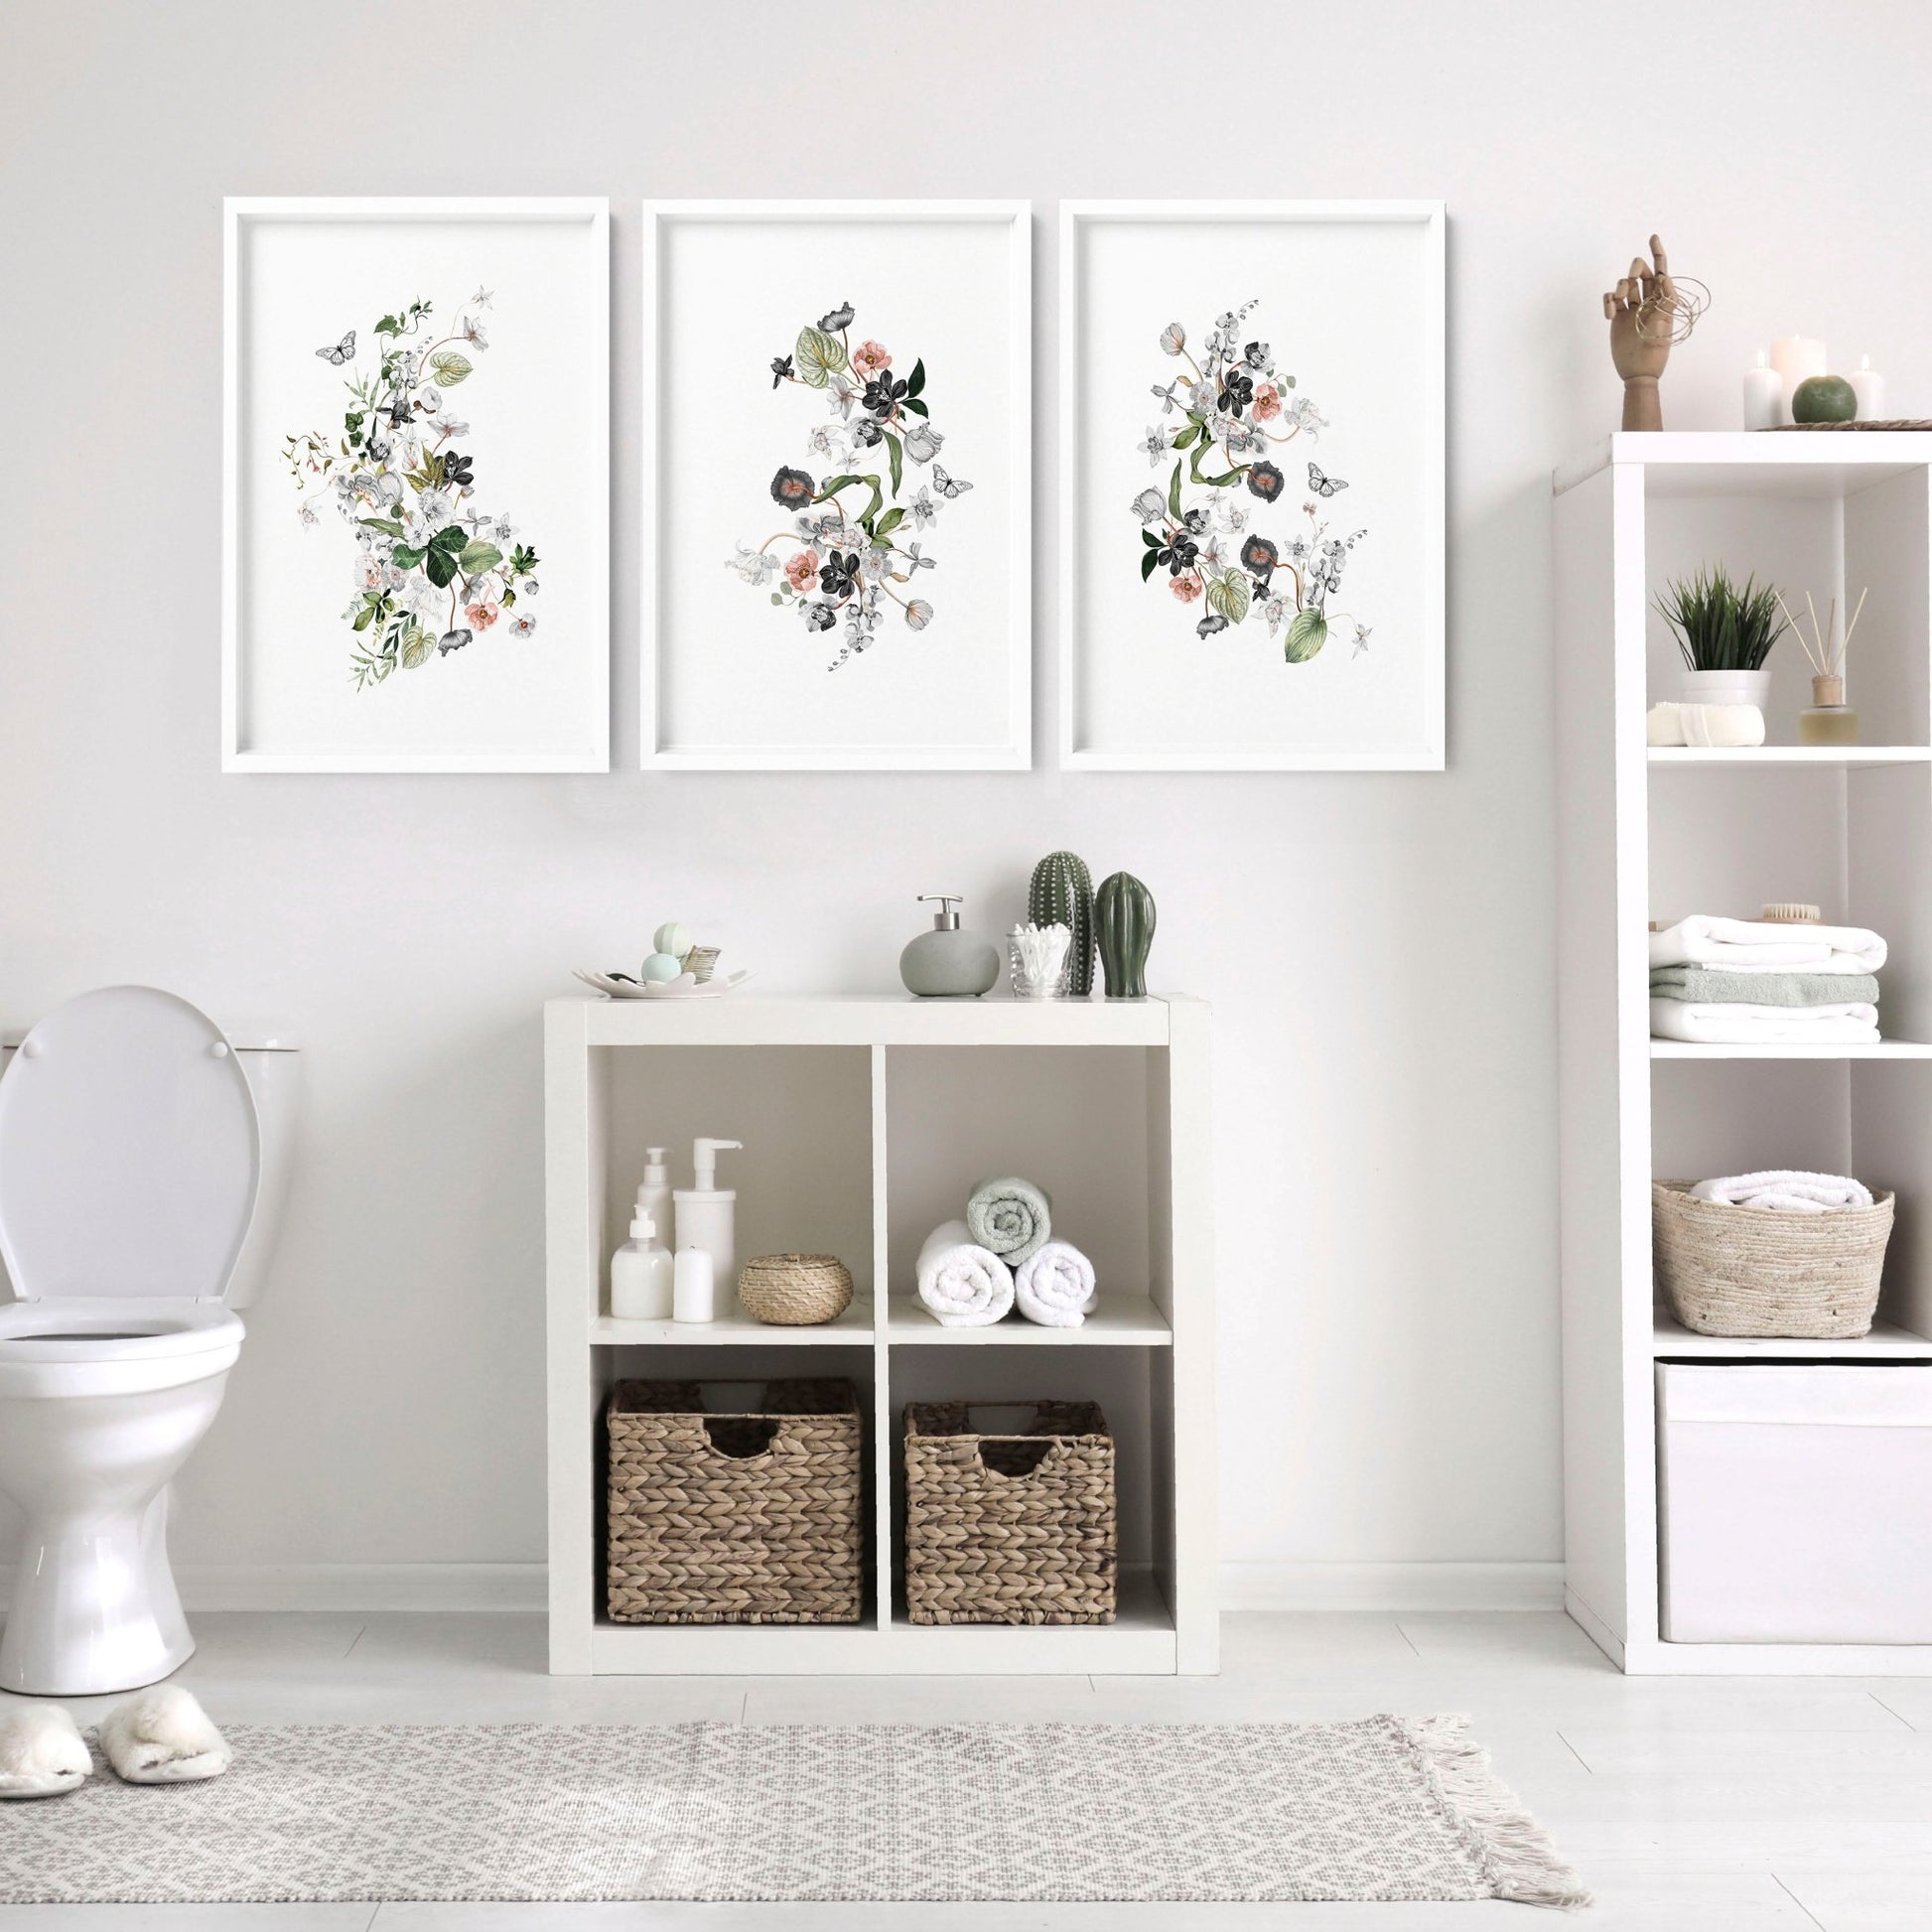 Bathroom chic shabby decor | set of 3 framed wall prints